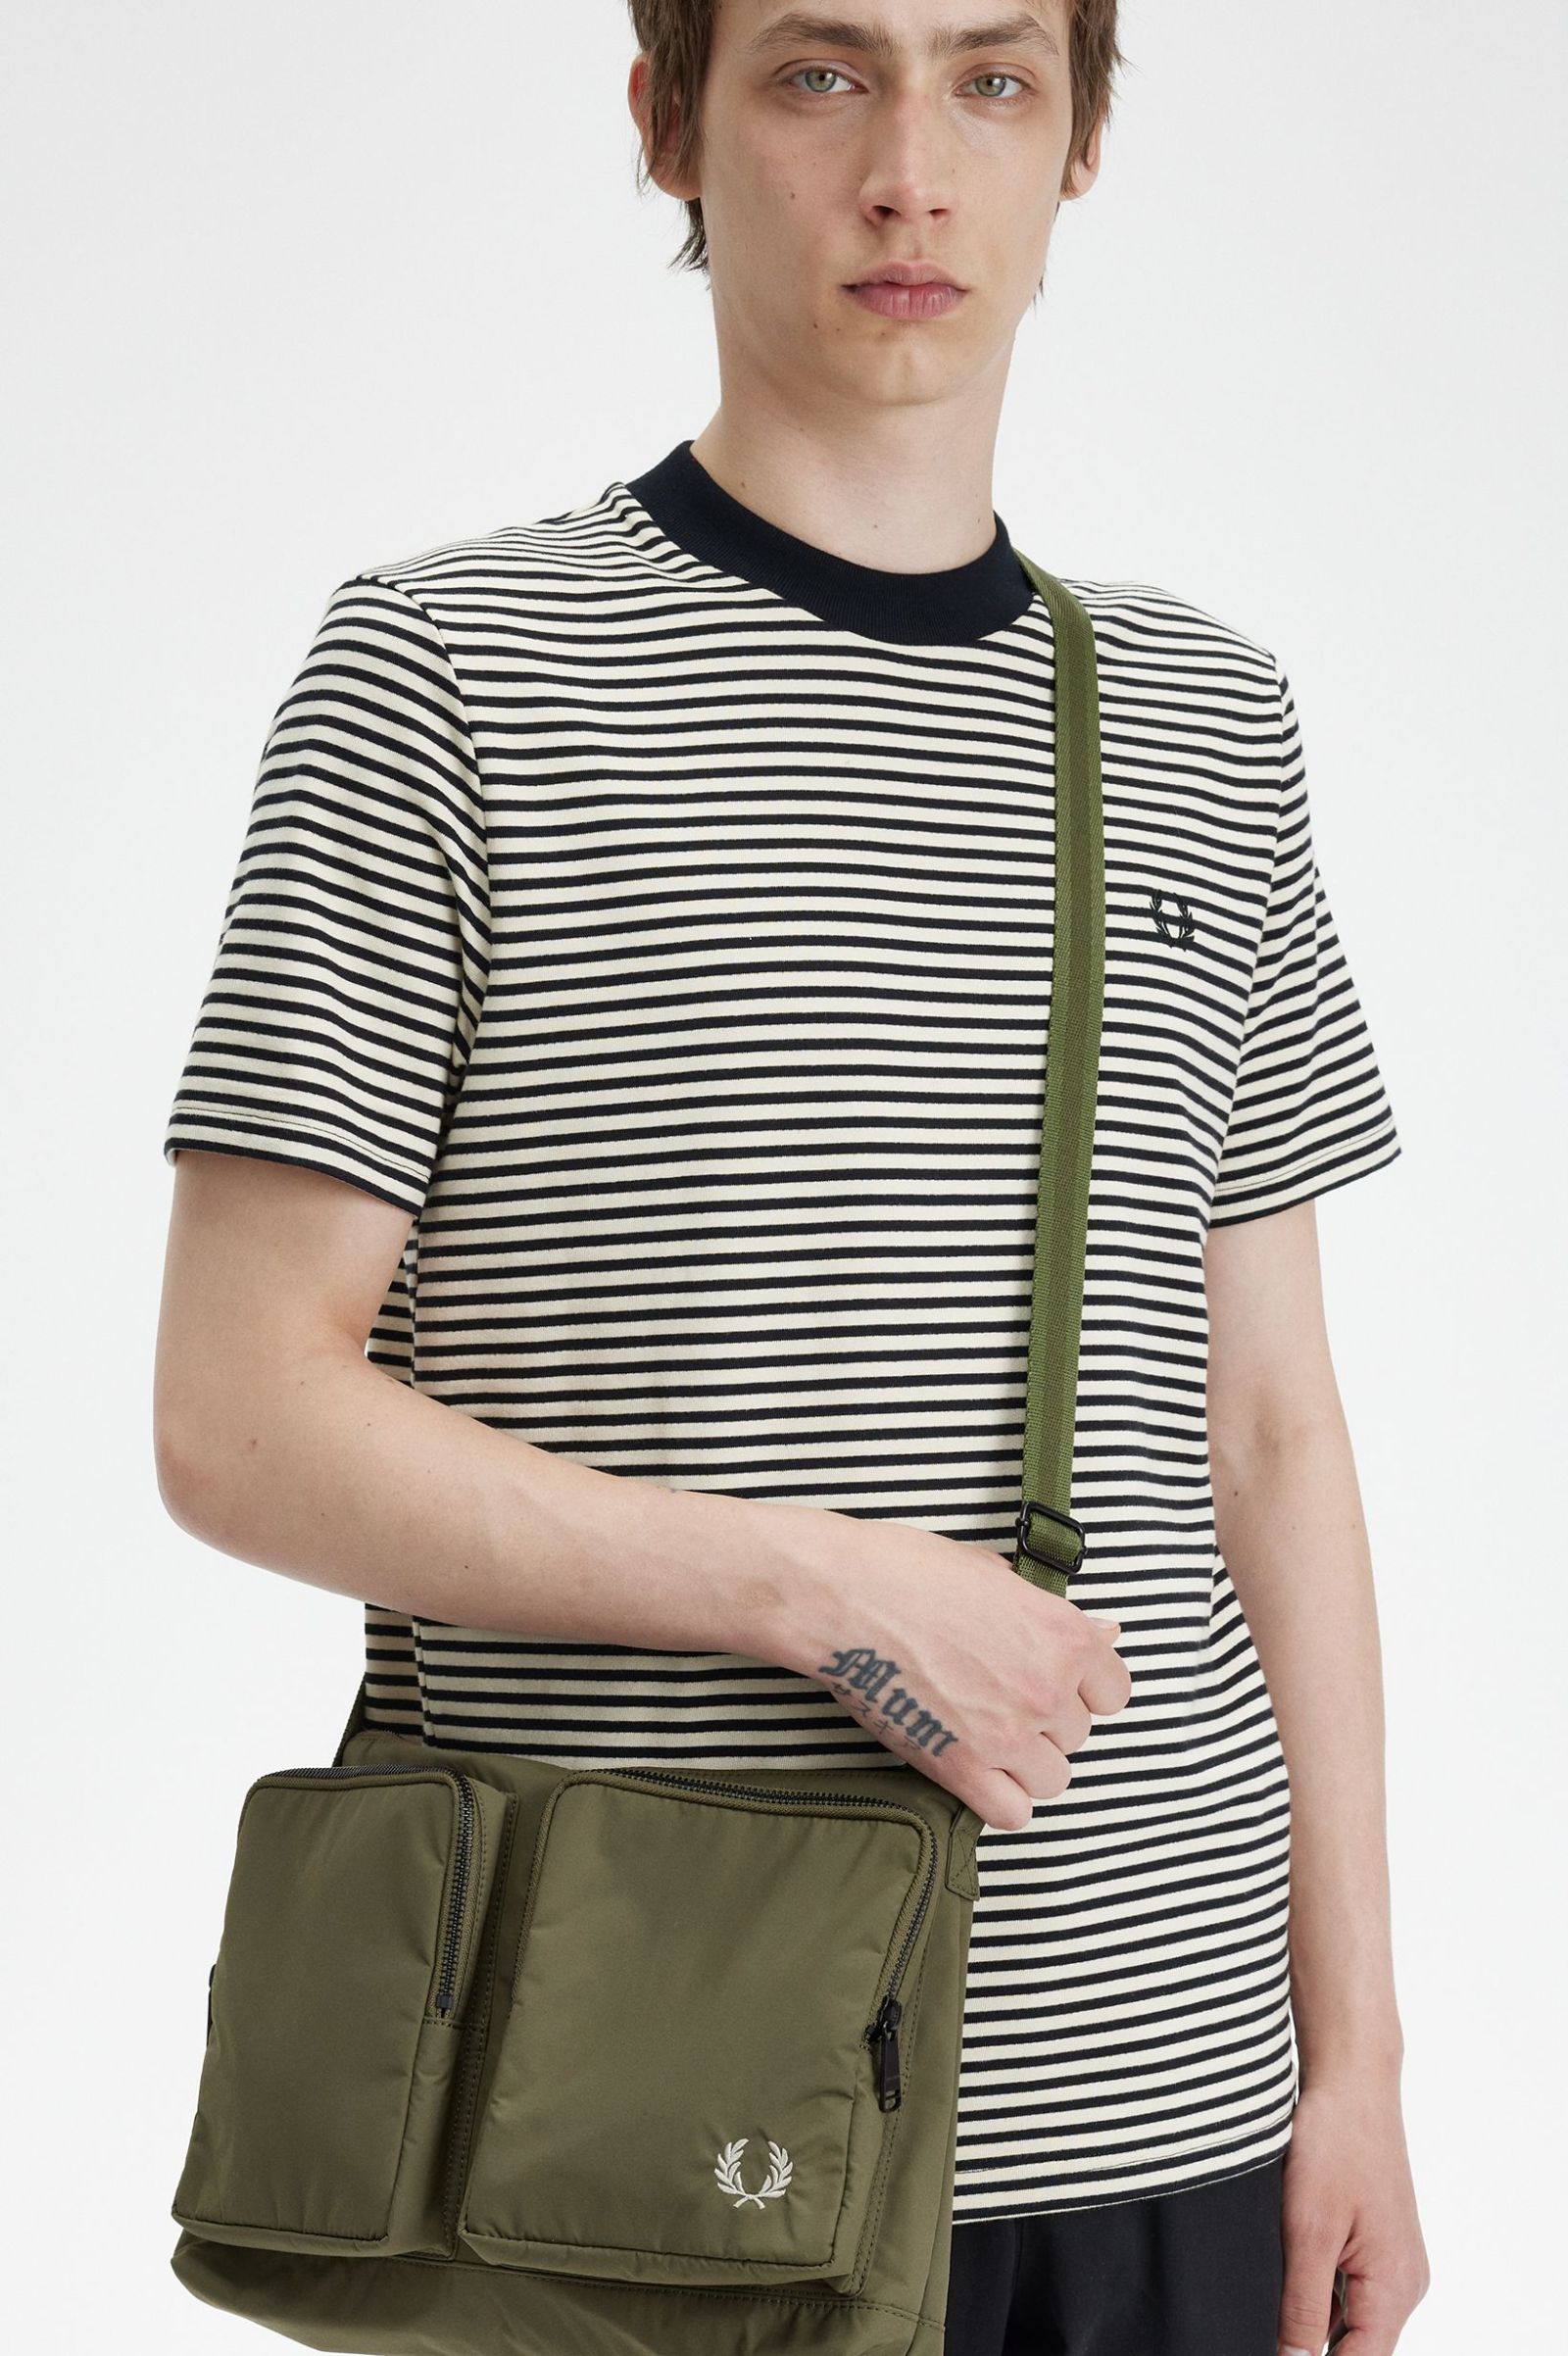 Nylon Pocket Side Bag - Uniform Green / Warm Grey | Men's Bags | Men's ...